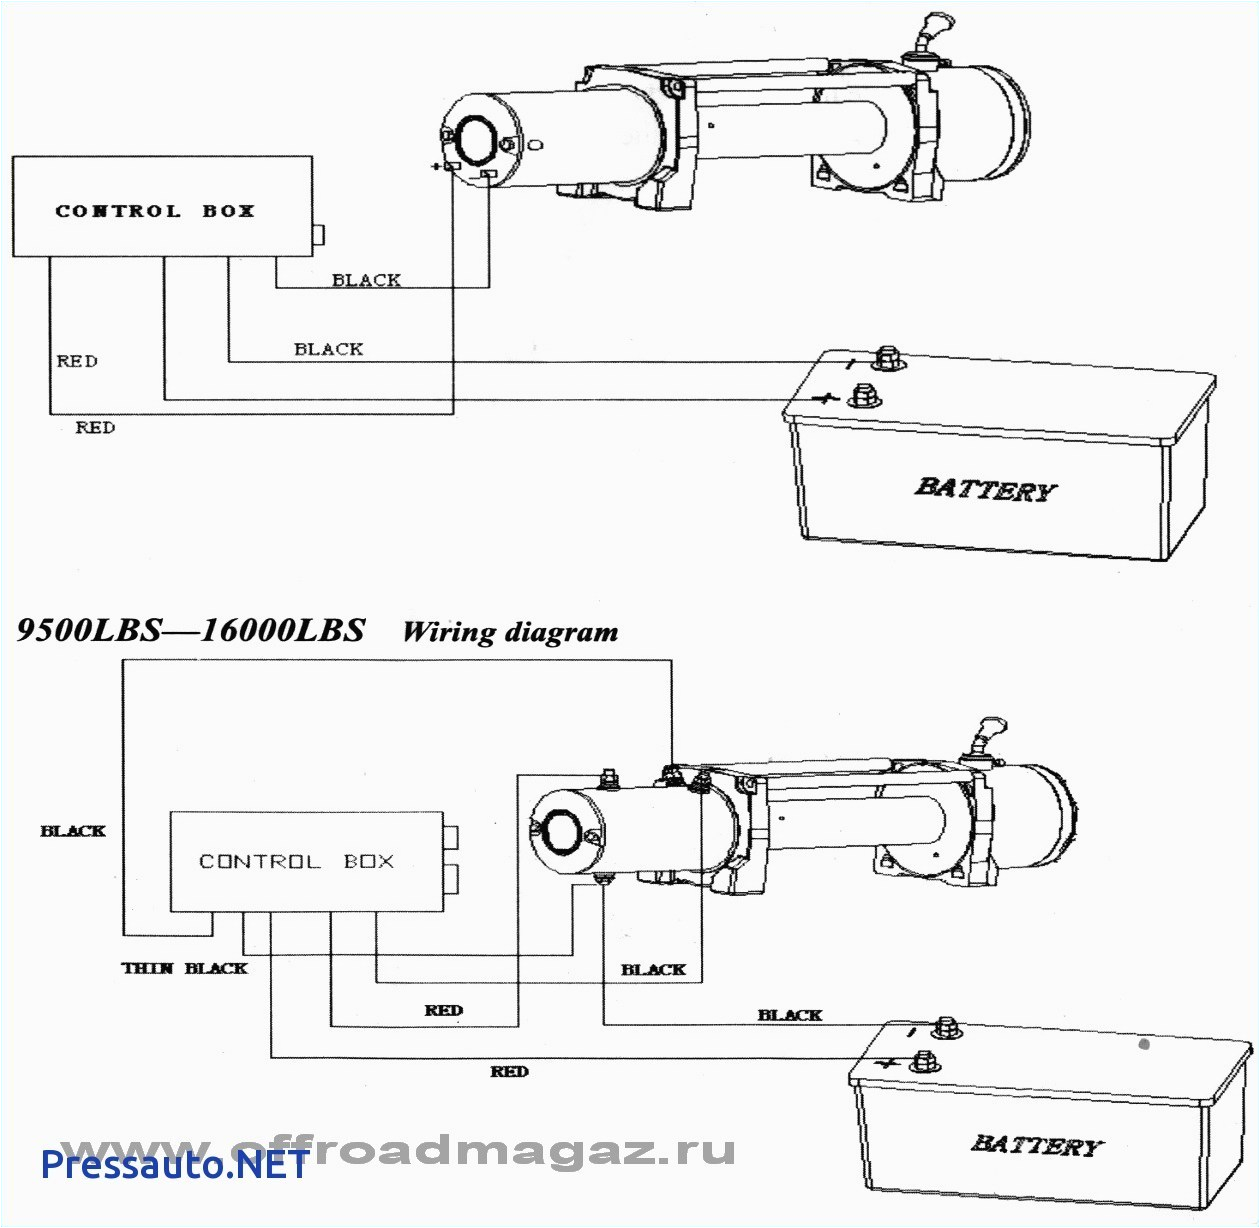 ramsey winch wiring diagram wiring diagram toolboxwiring diagram for ramsey 15000 lb winch wiring diagram inside